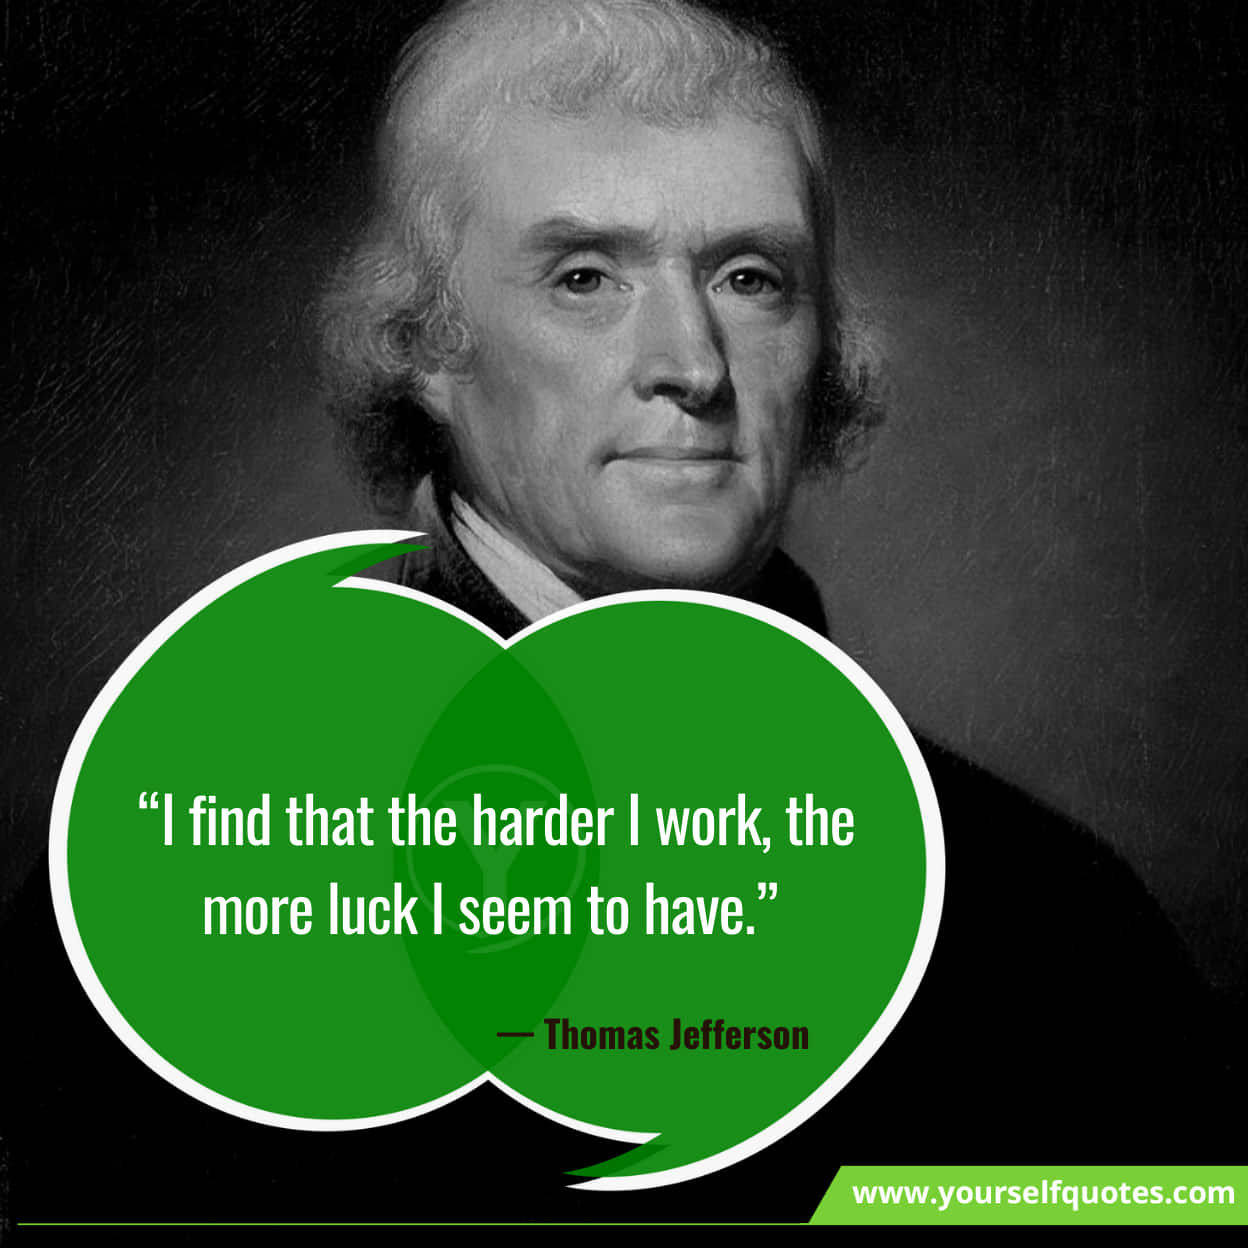 Thomas Jefferson Inspiring Quotes